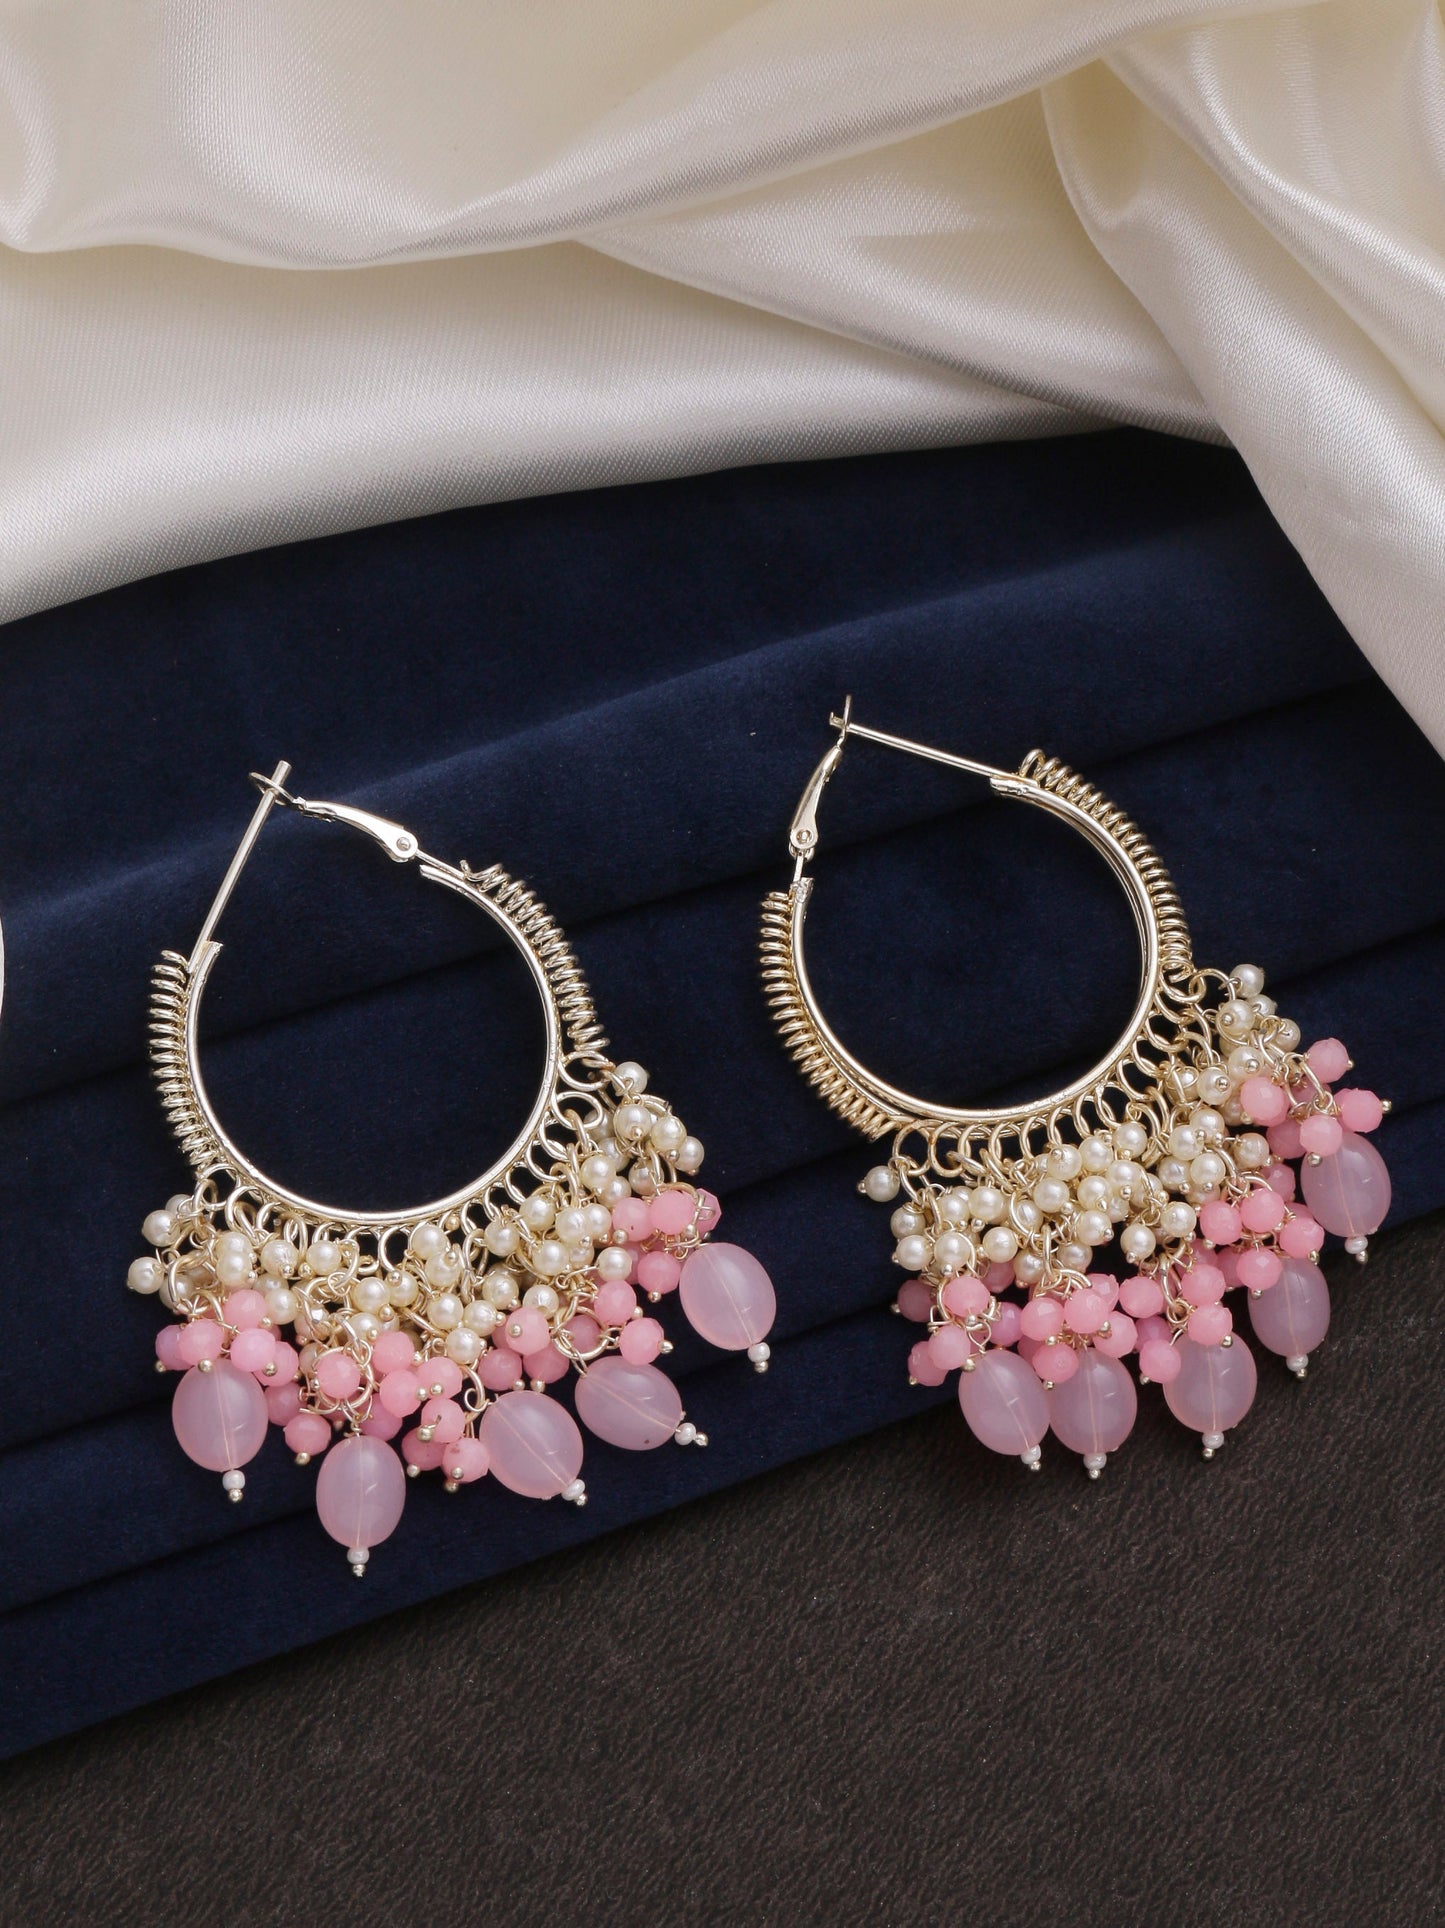 Swisni Alloy Light Pink Pearl Bali Earrings For Girls And Womens Alloy Earring Set For Women|For Girls|Gifting|Anniversary|Birthday|Girlfriend